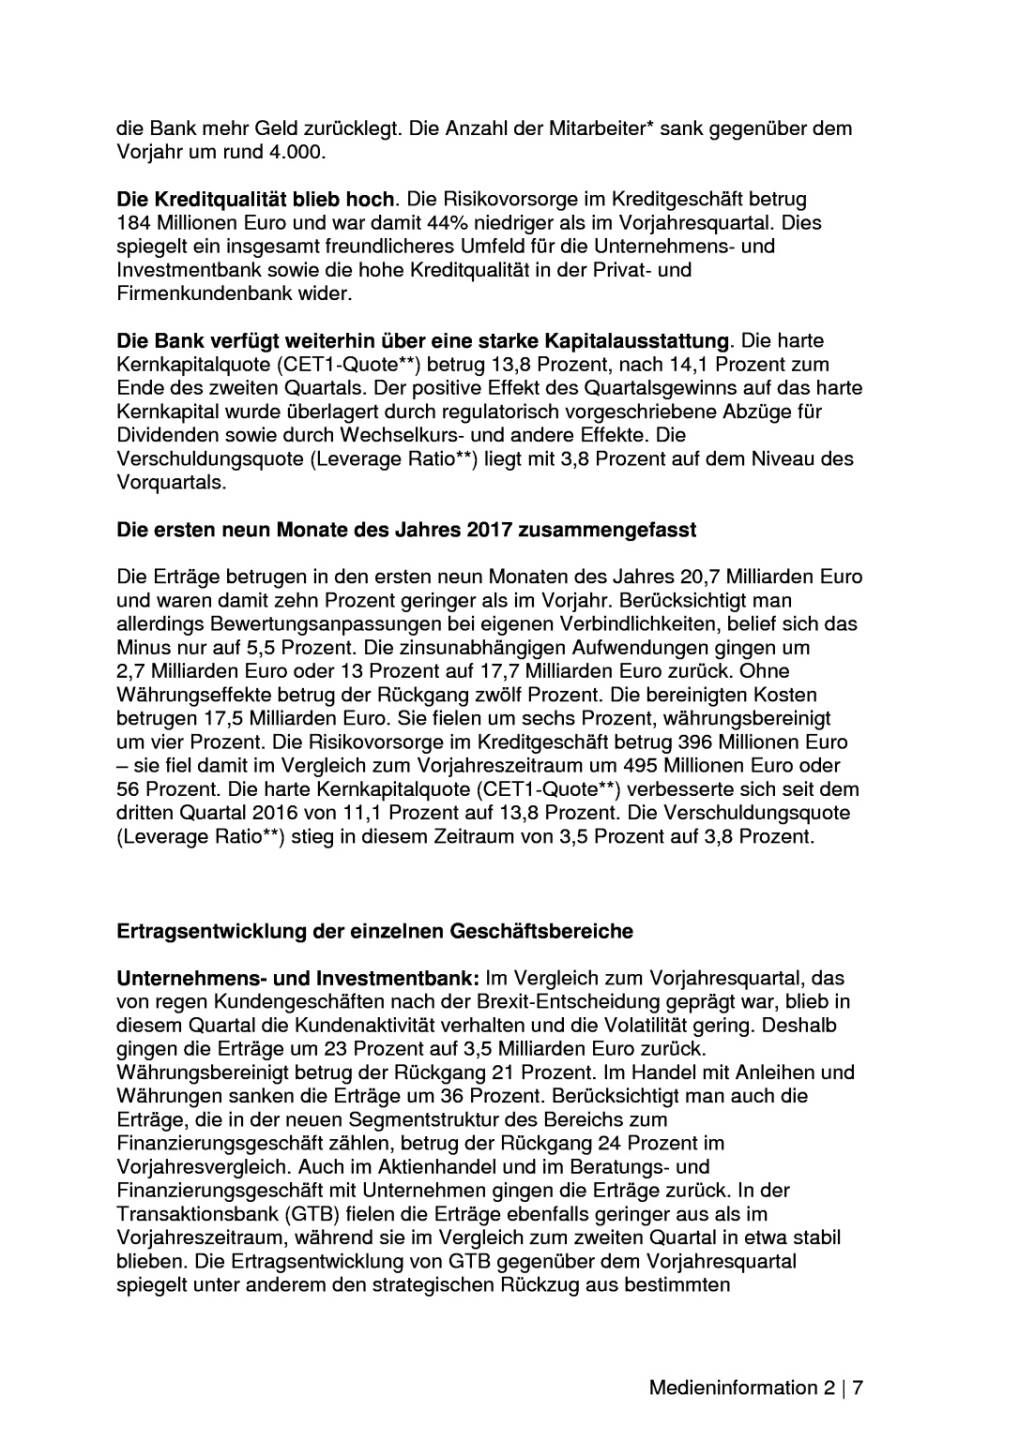 Deutsche Bank: Q3, Seite 2/7, komplettes Dokument unter http://boerse-social.com/static/uploads/file_2378_deutsche_bank_q3.pdf